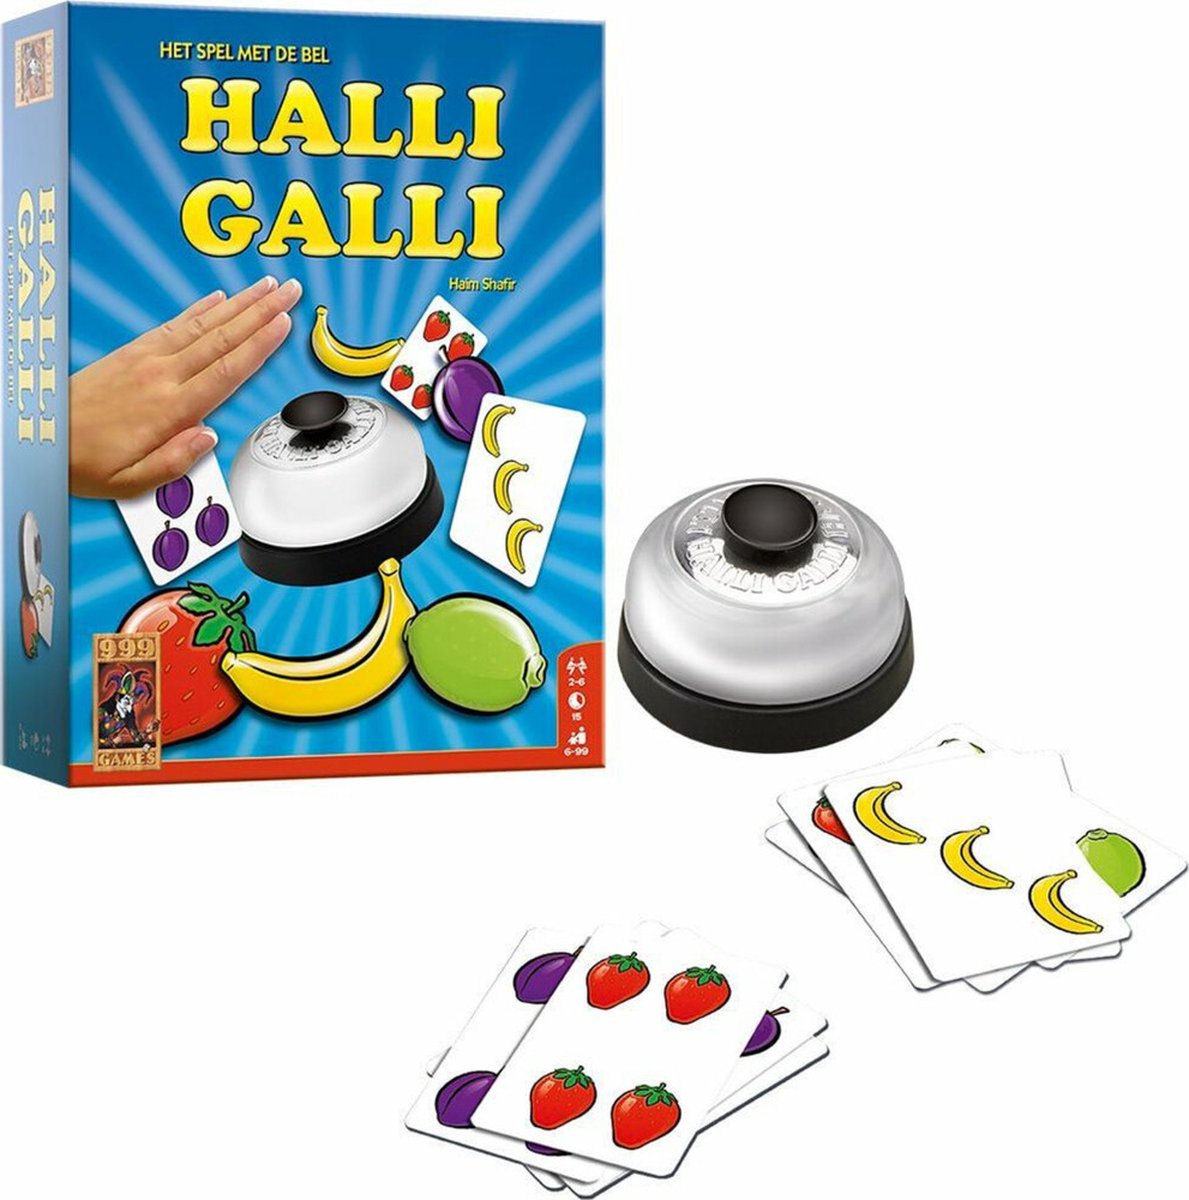 Diverse binding Electrificeren Halli Galli Actiespel | Games | bol.com